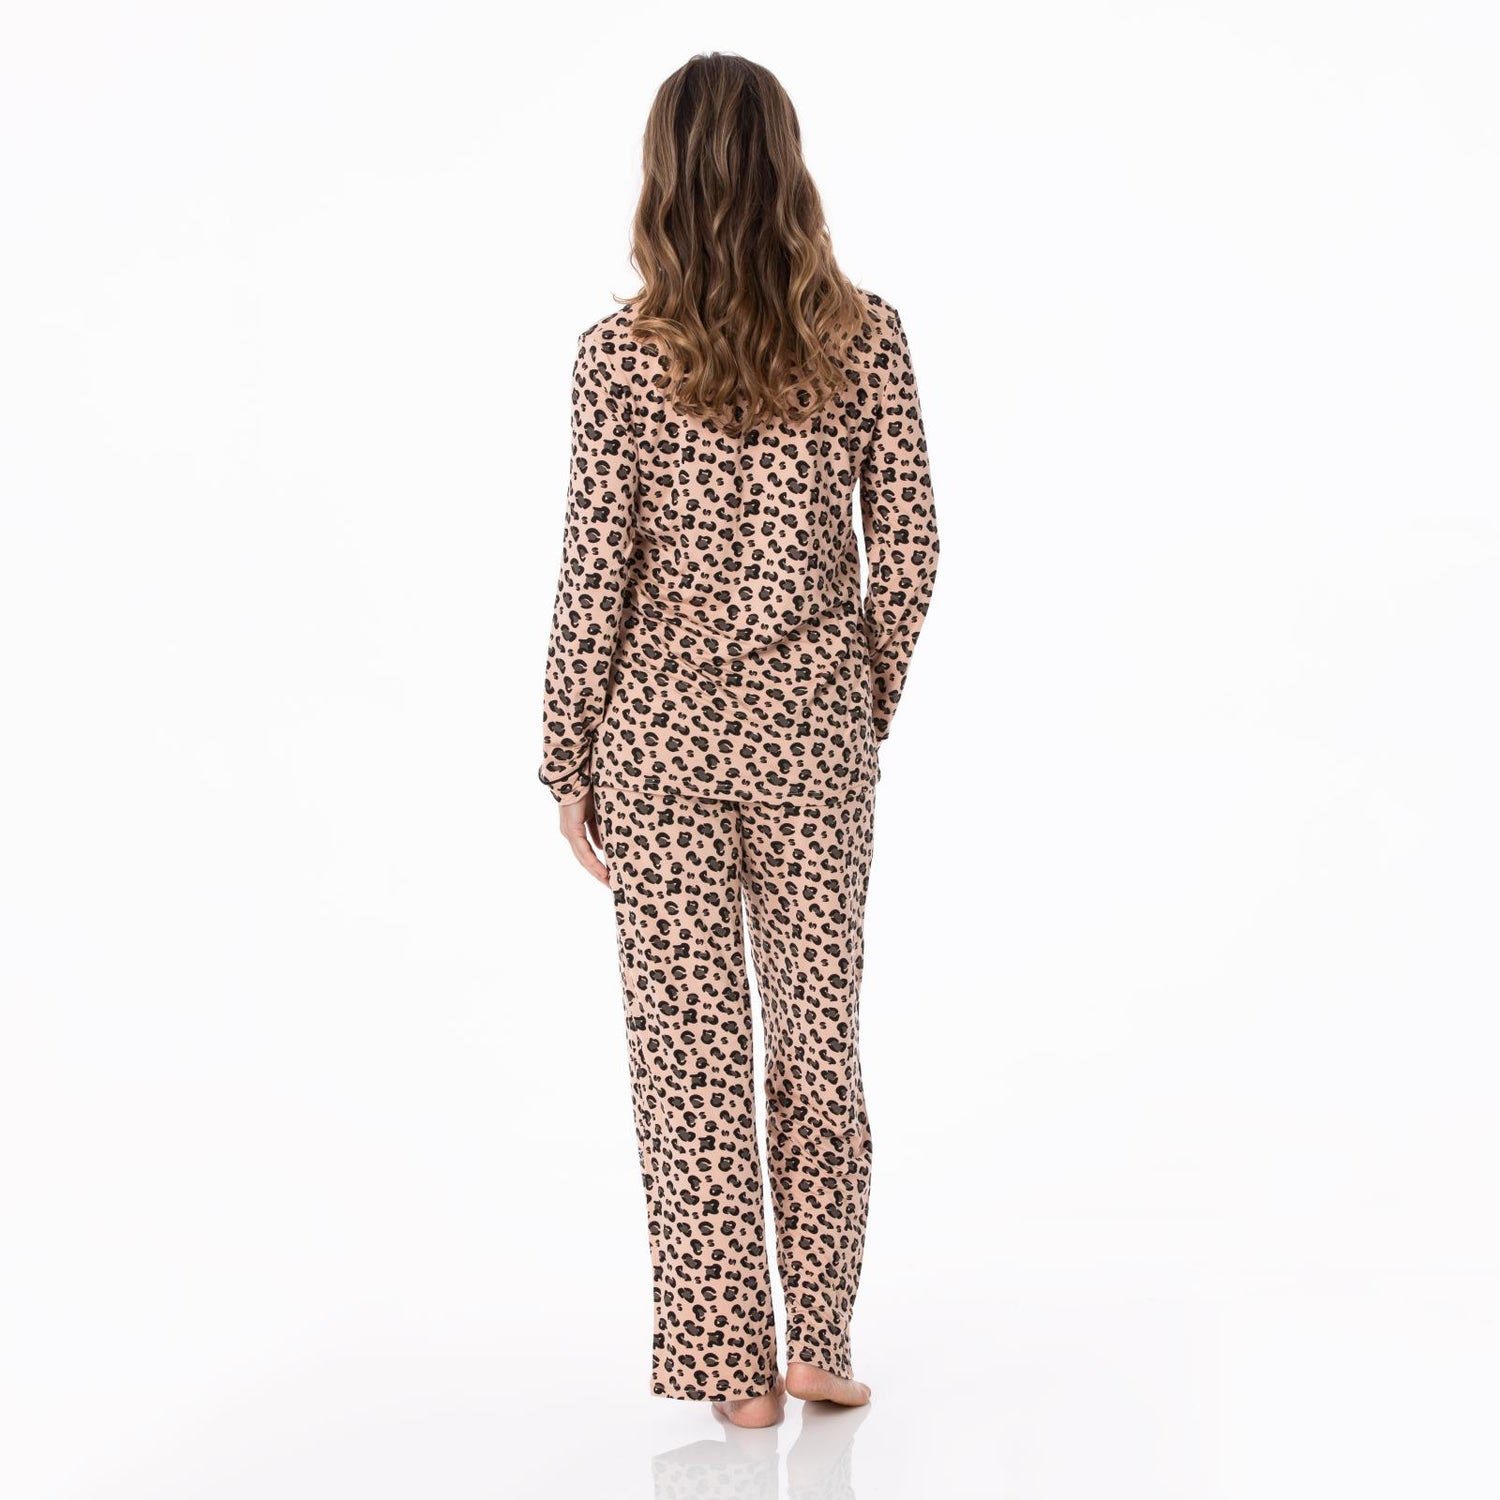 Women's Print Long Sleeve Collared Pajama Set in Suede Cheetah Print